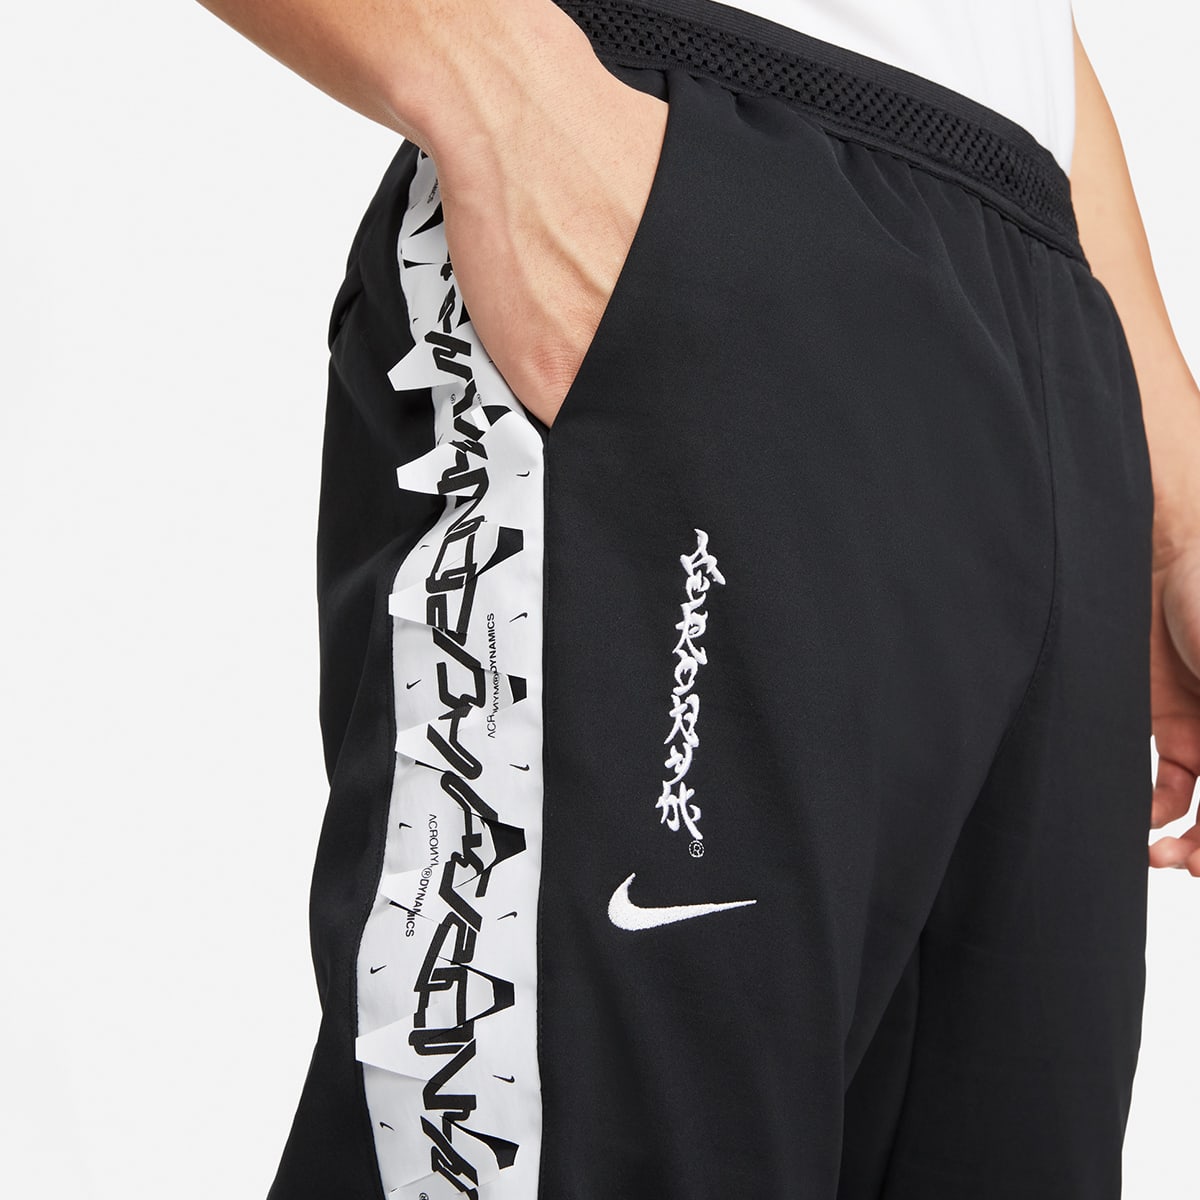 Nike x Acronym Knit Pant (Black & White) | END. Launches